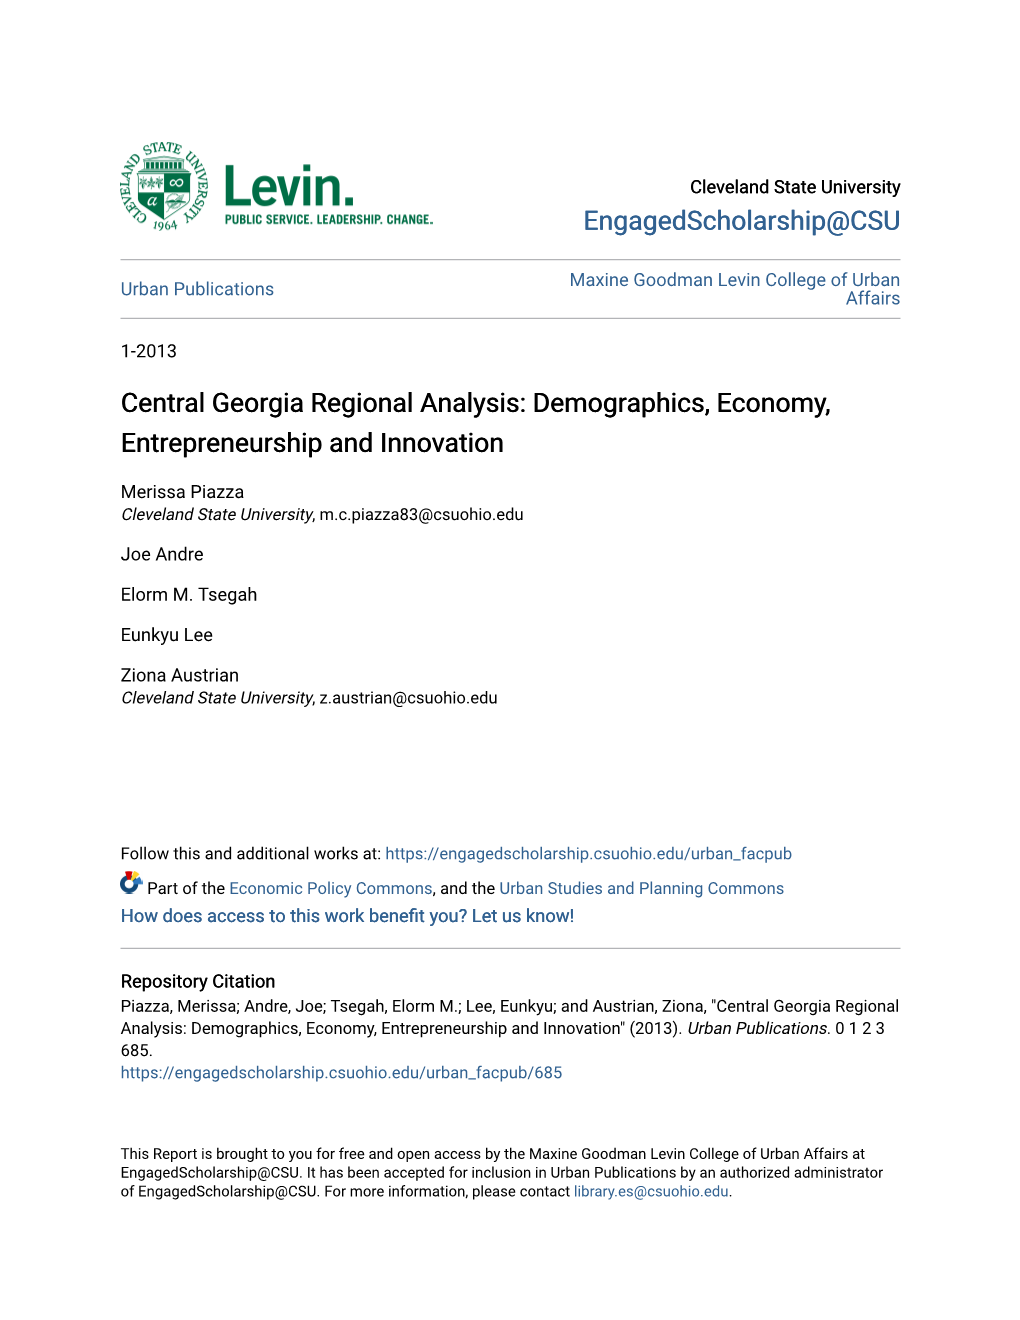 Central Georgia Regional Analysis: Demographics, Economy, Entrepreneurship and Innovation